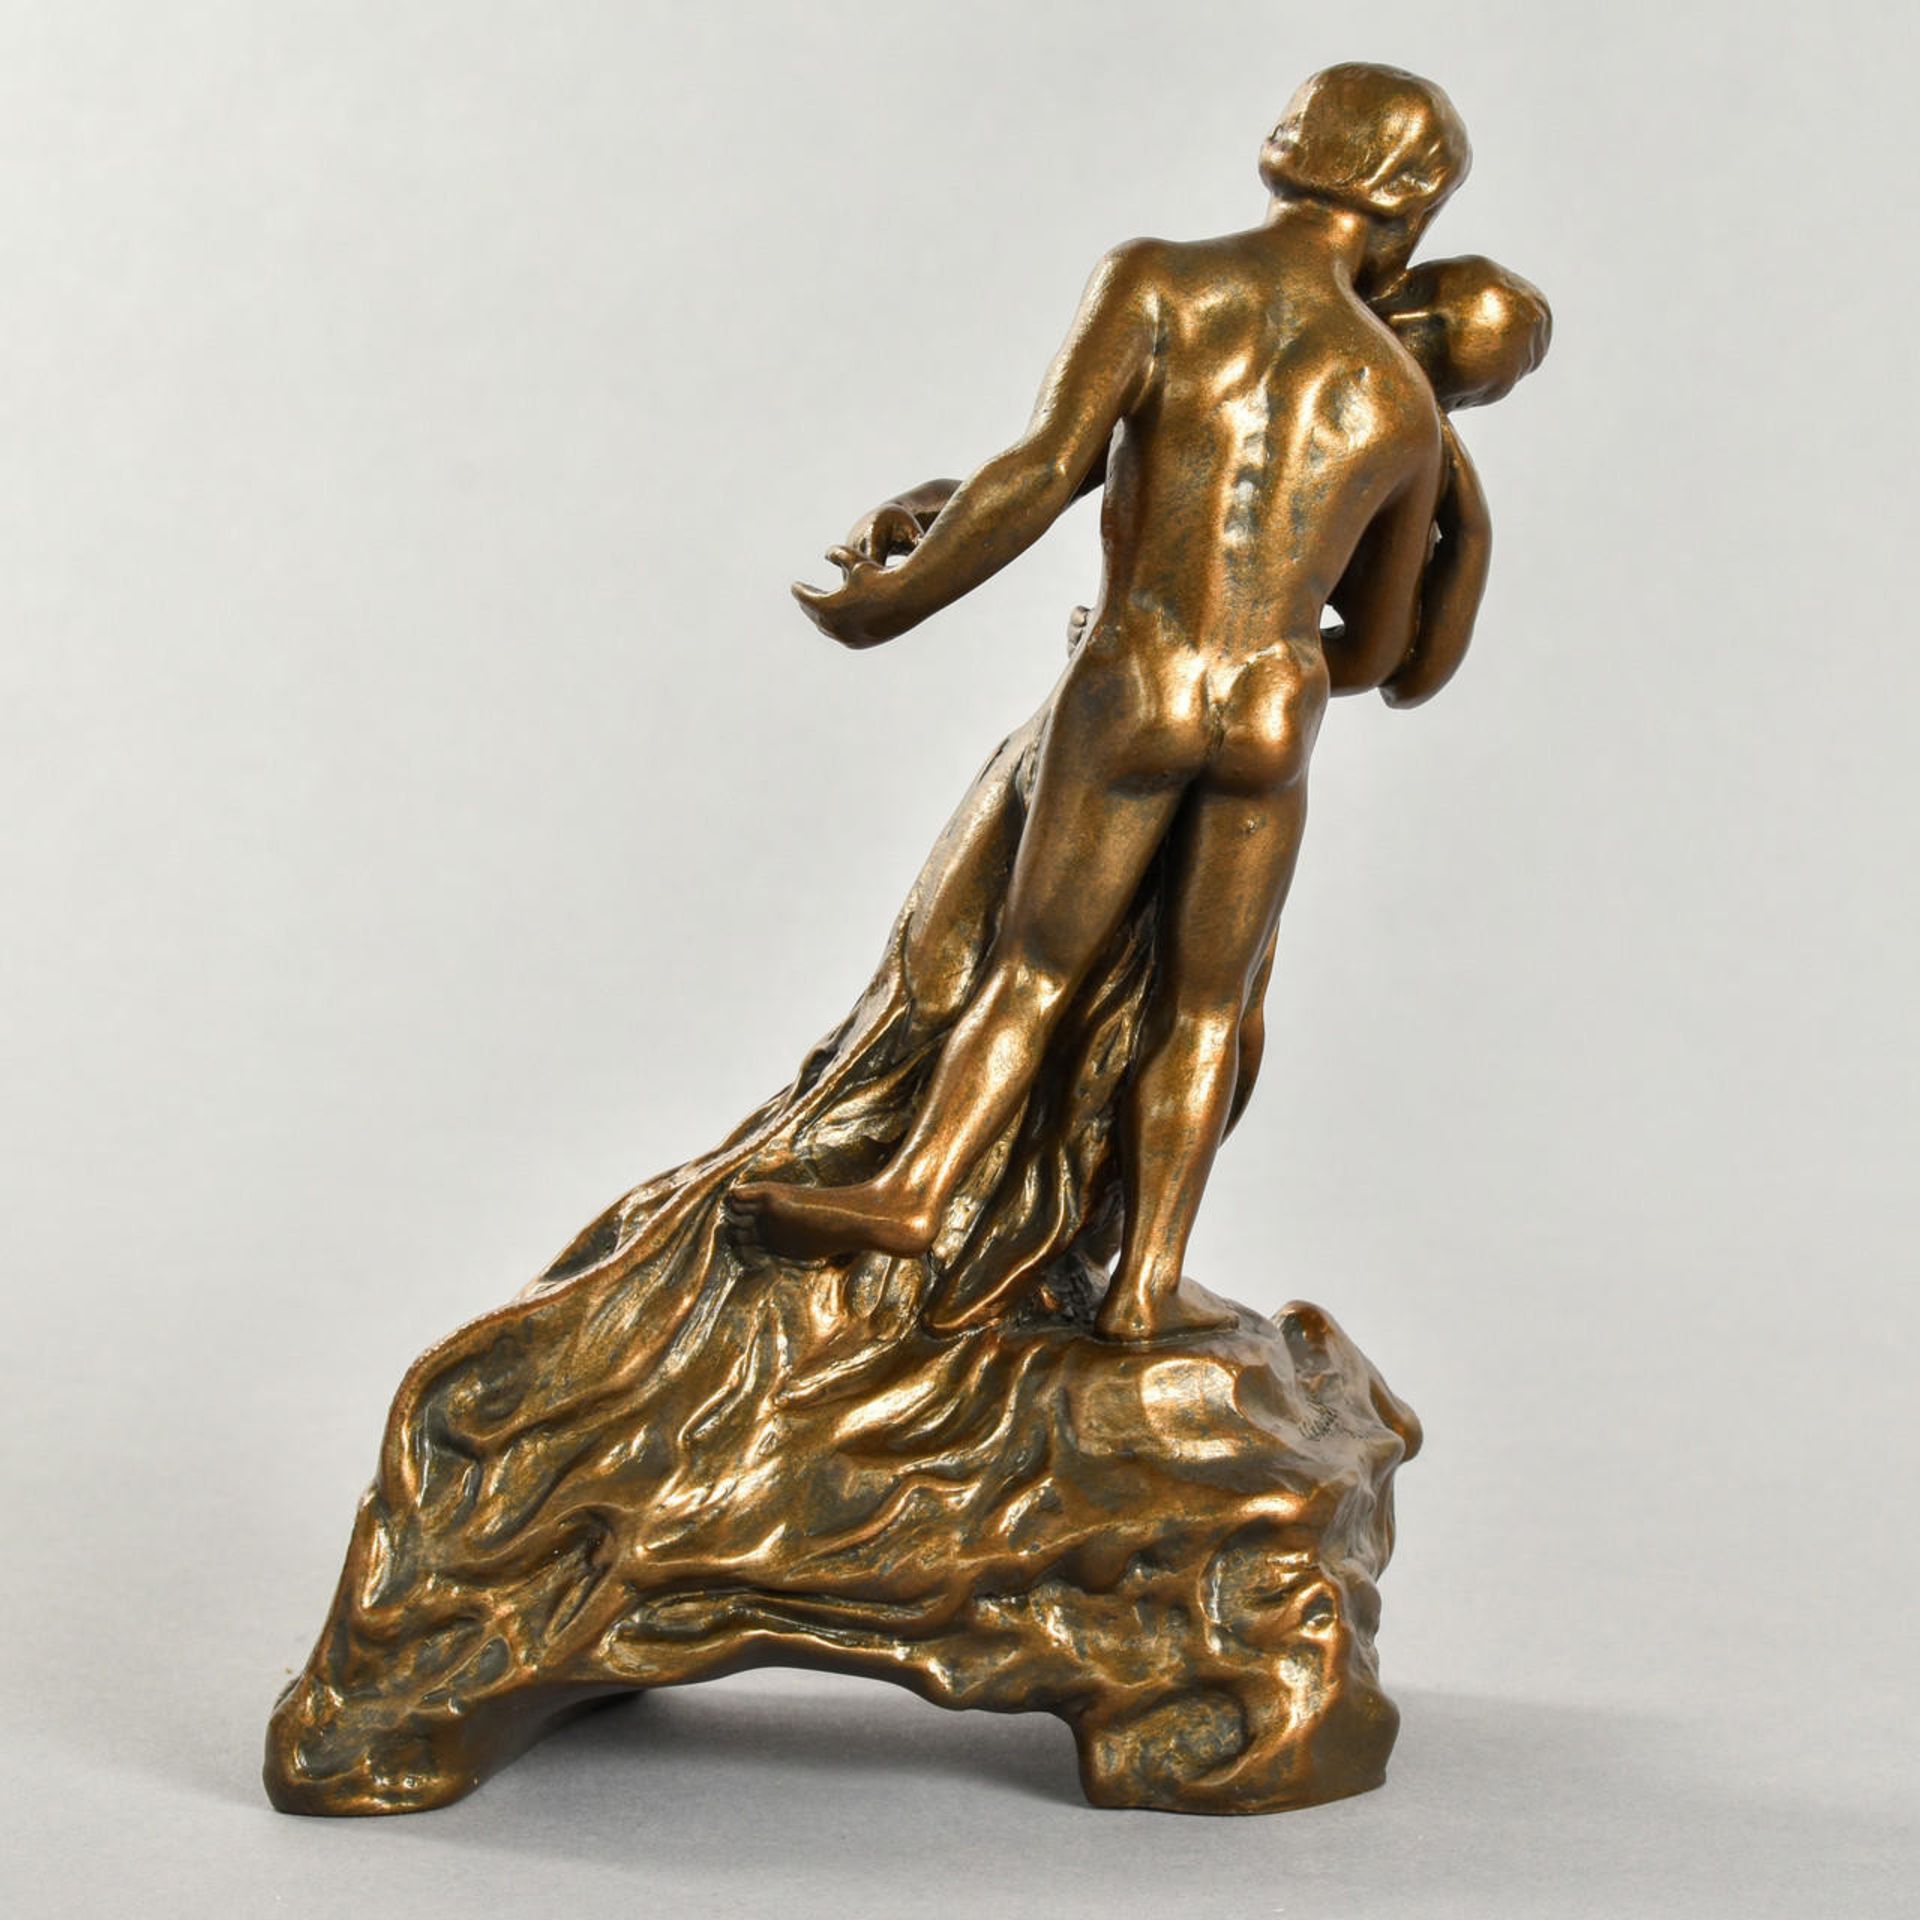 Camille Claudel "La Valse" Sculpture - Image 3 of 3